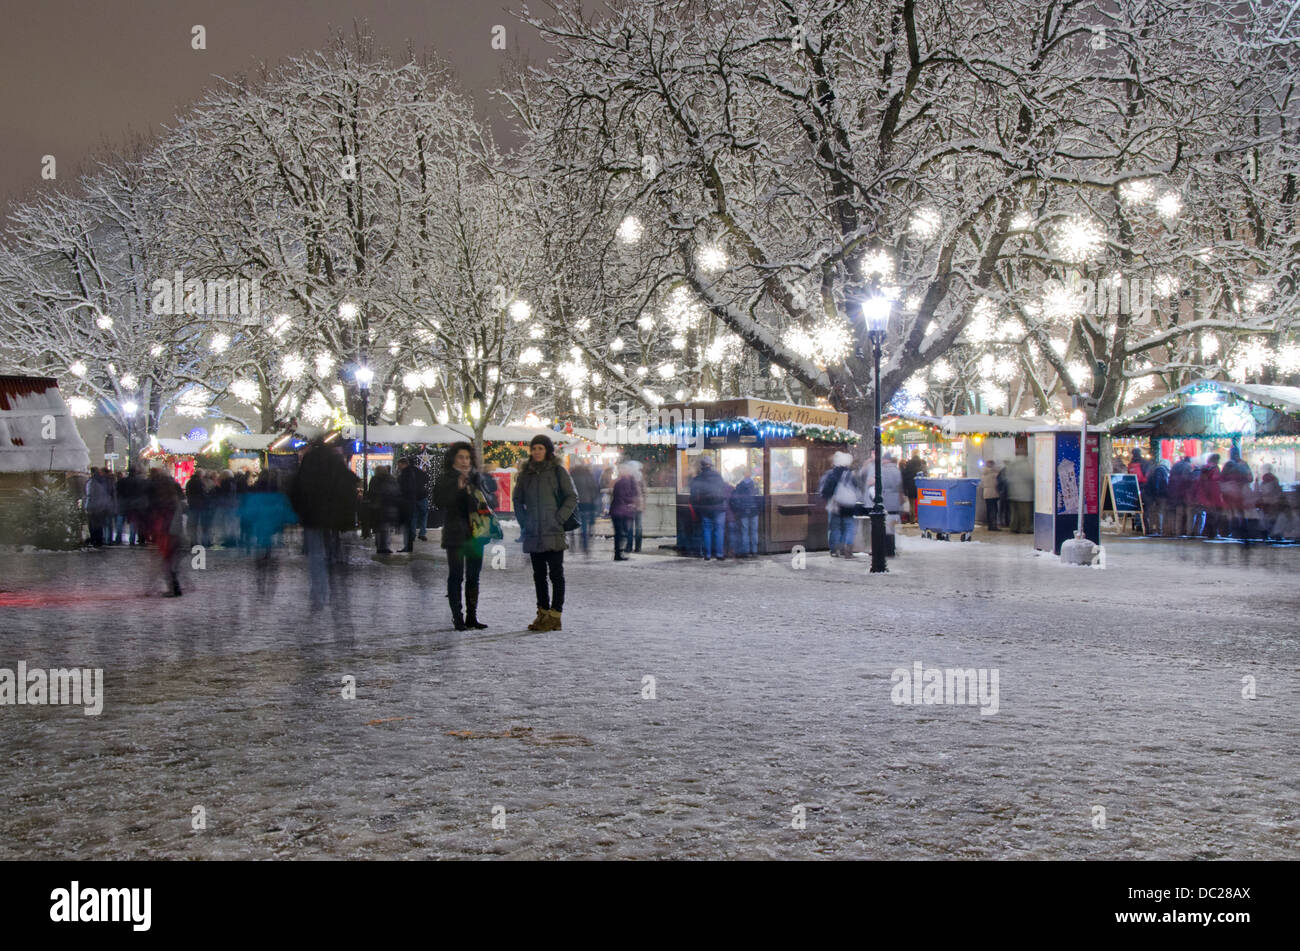 Switzerland, Basel. Munsterplatz Winter Holiday Market. Holiday lights on a winter night at the Musterplatz market. Stock Photo